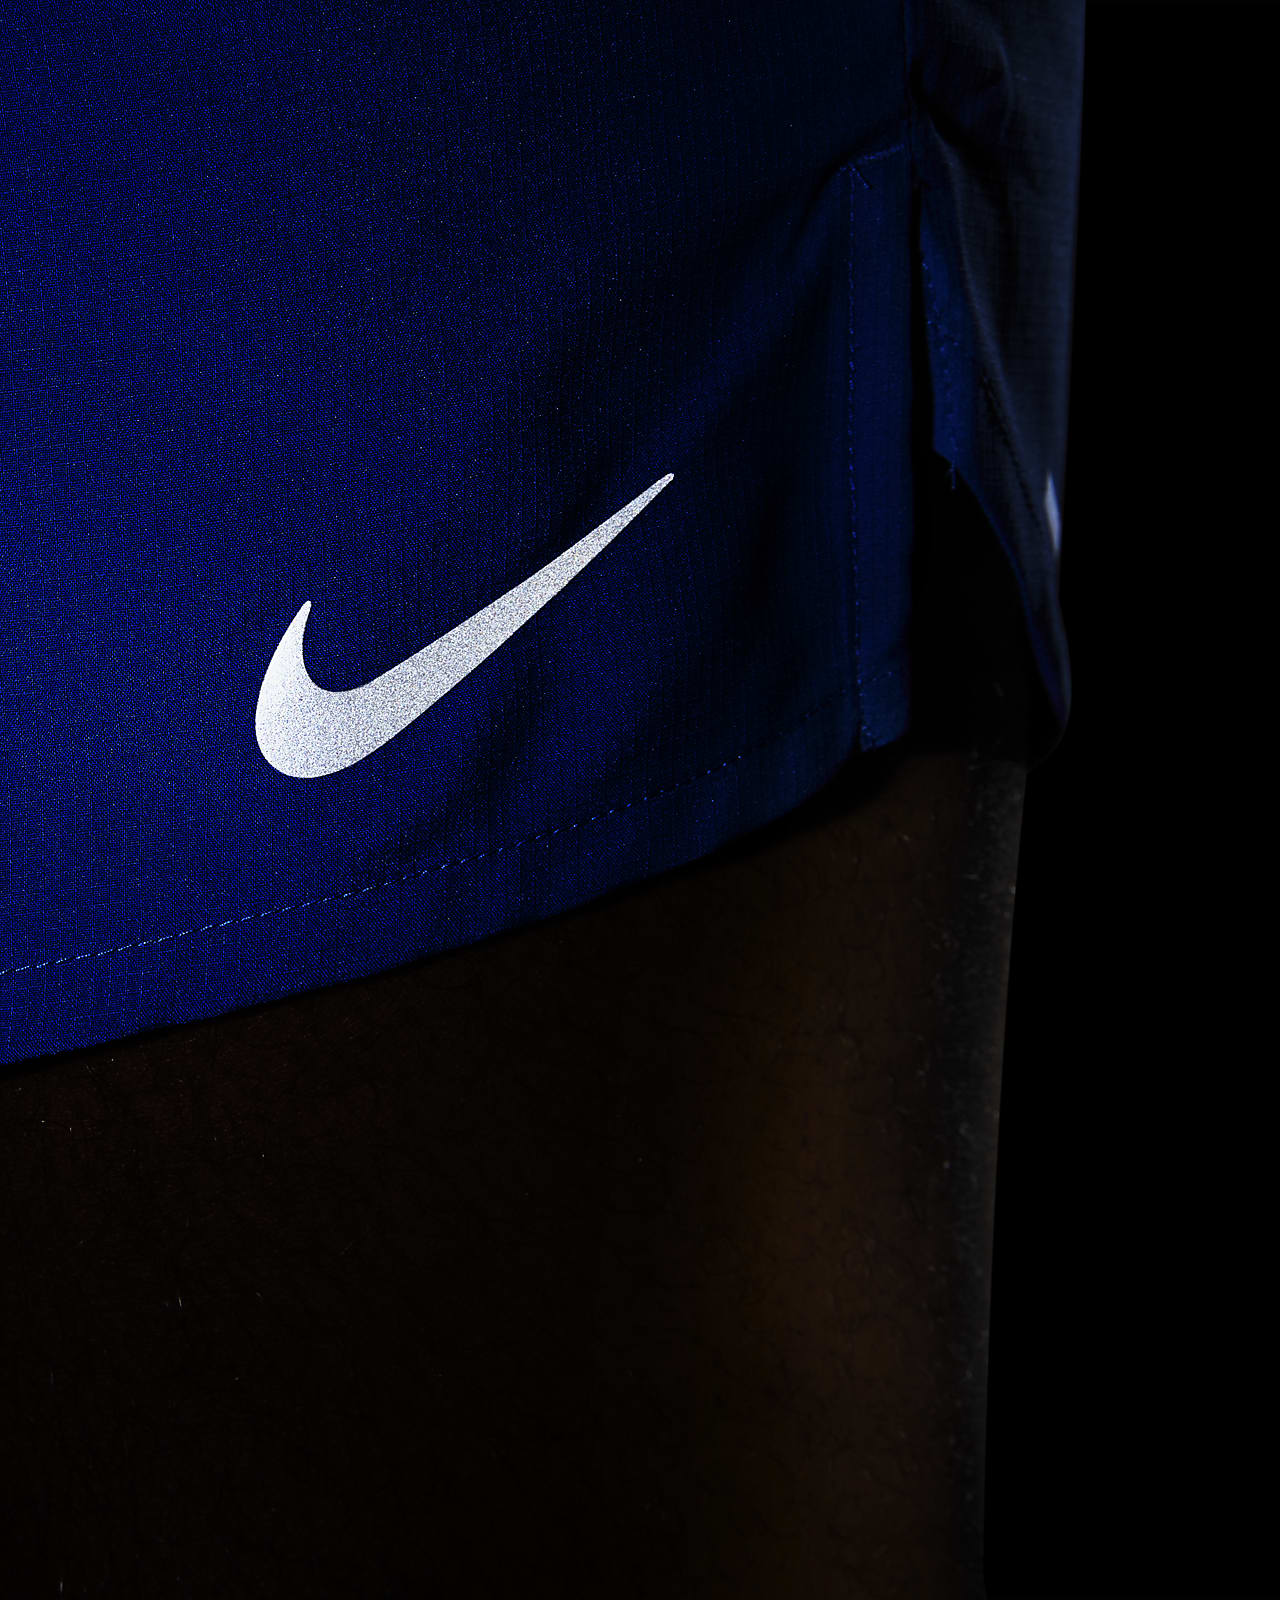 Nike Dri-Fit Running Shorts Mens 2XL XXL 4 CJ7847-010 Lined Black Active  $35